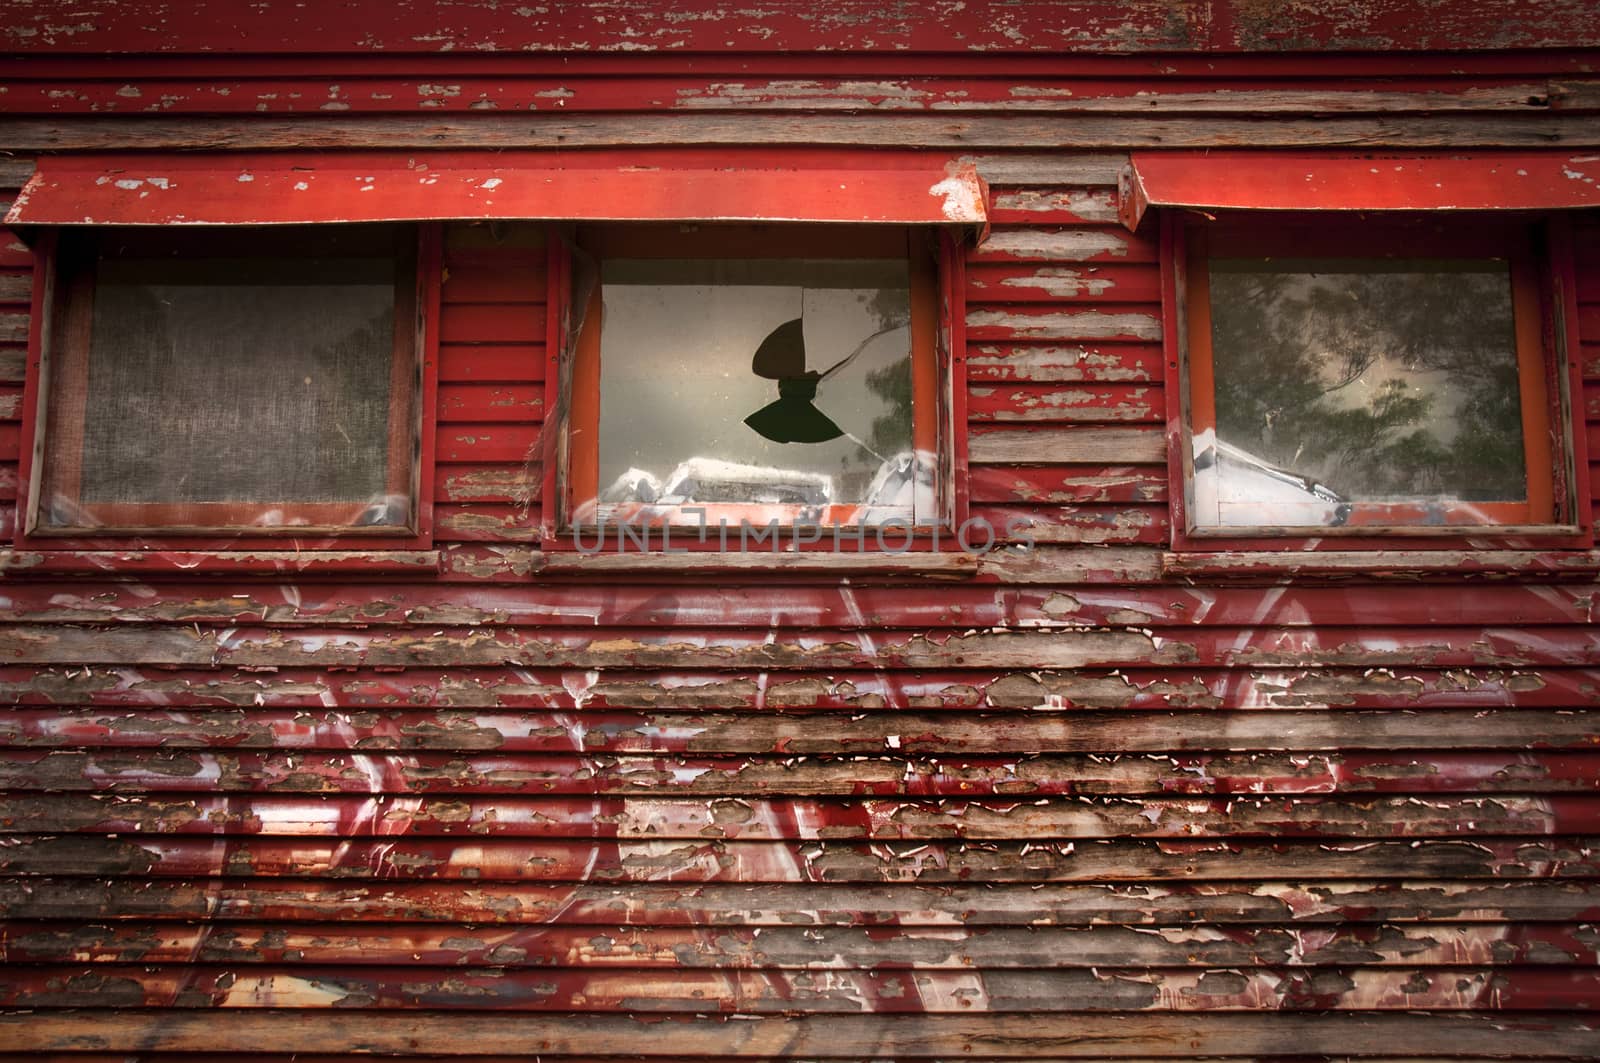 Abandoned train with broken windows